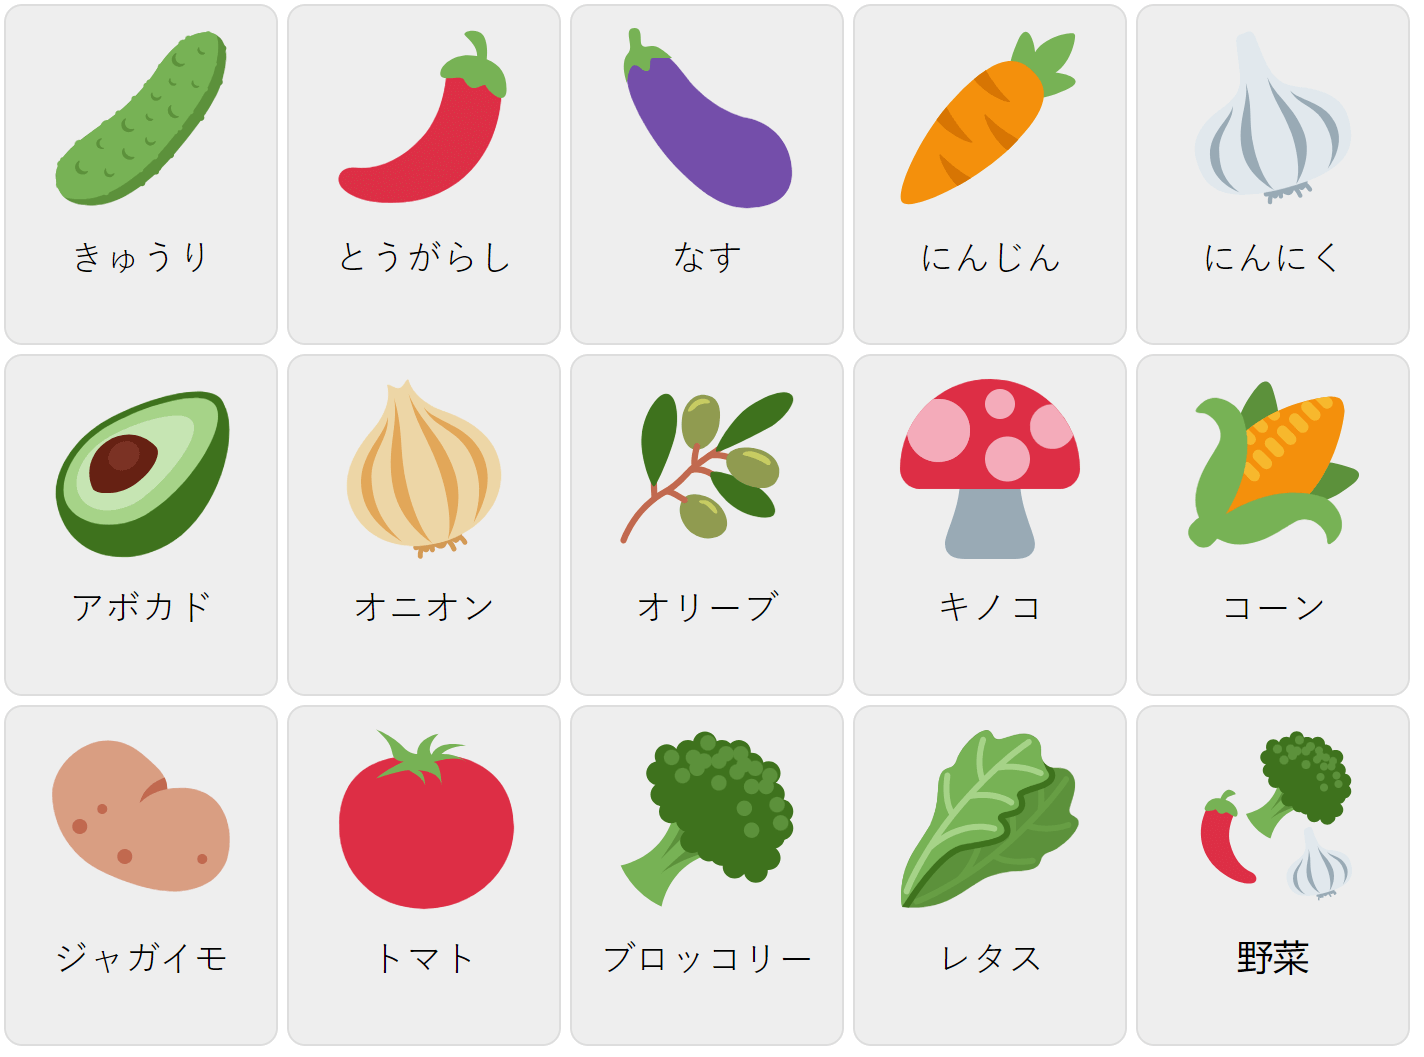 Verduras en japonés